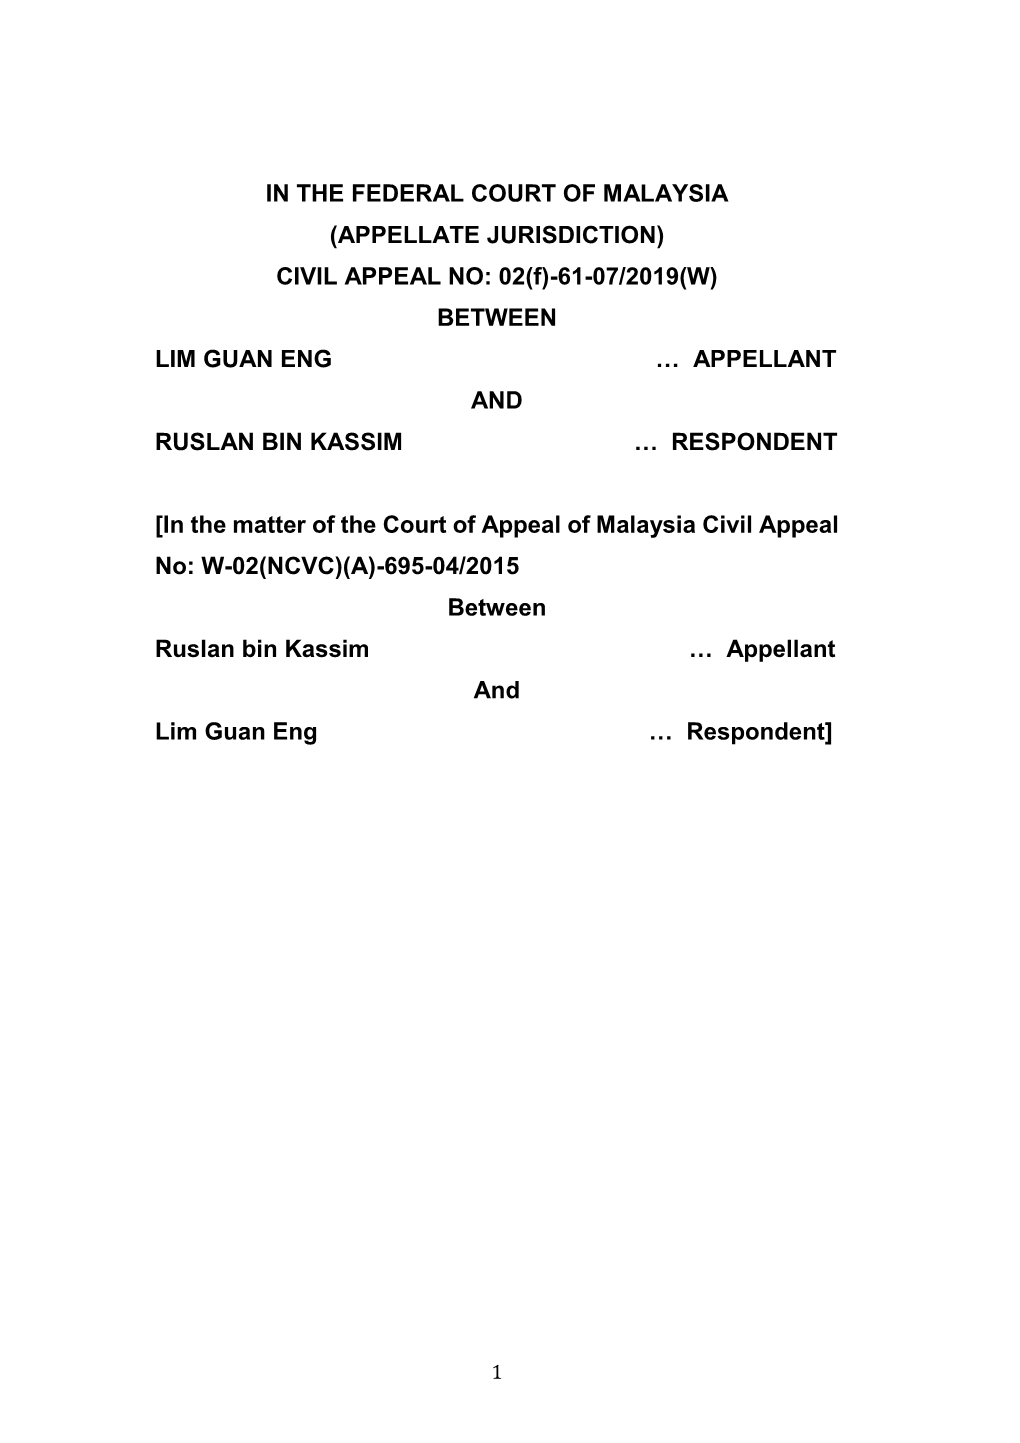 Between Lim Guan Eng … Appellant and Ruslan Bin Kassim … Respondent